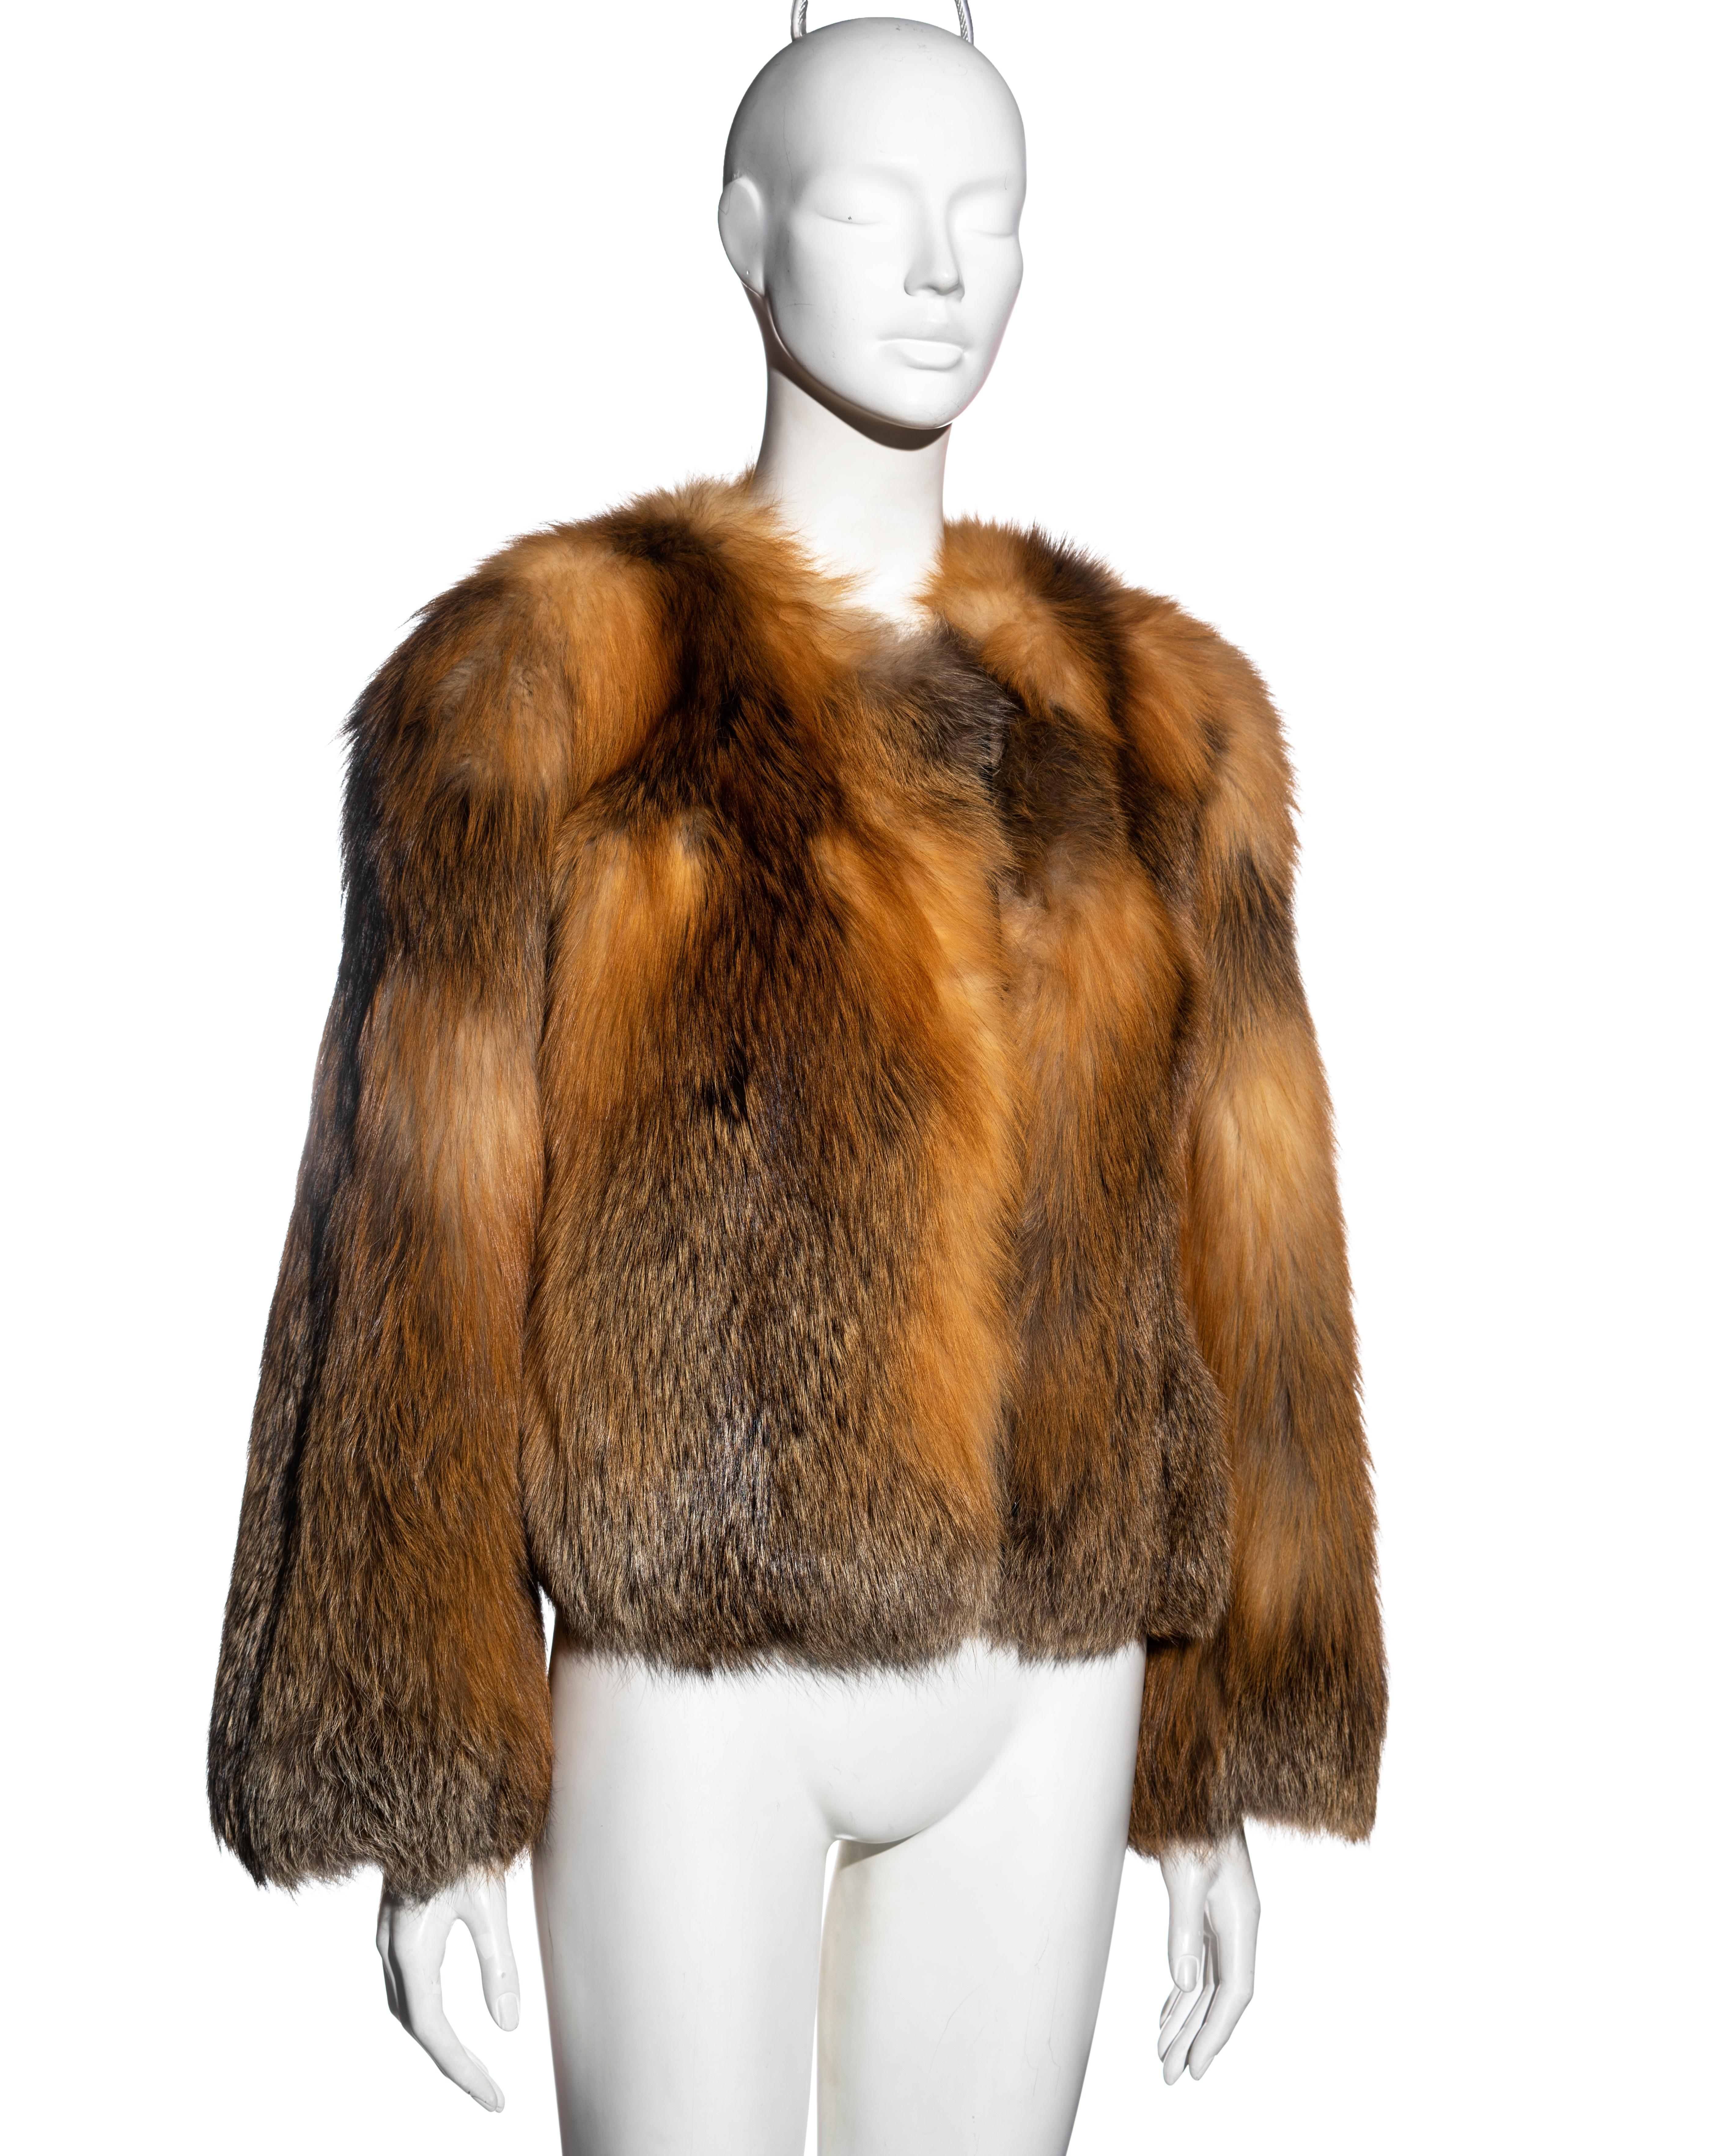 ▪ Dolce & Gabbana golden fox fur jacket 
▪ Hook fastenings to front opening 
▪ Wide sleeves 
▪ Silk lining
▪ IT 44 - FR 40 - UK 12 - US 8
▪ Fall-Winter 2004